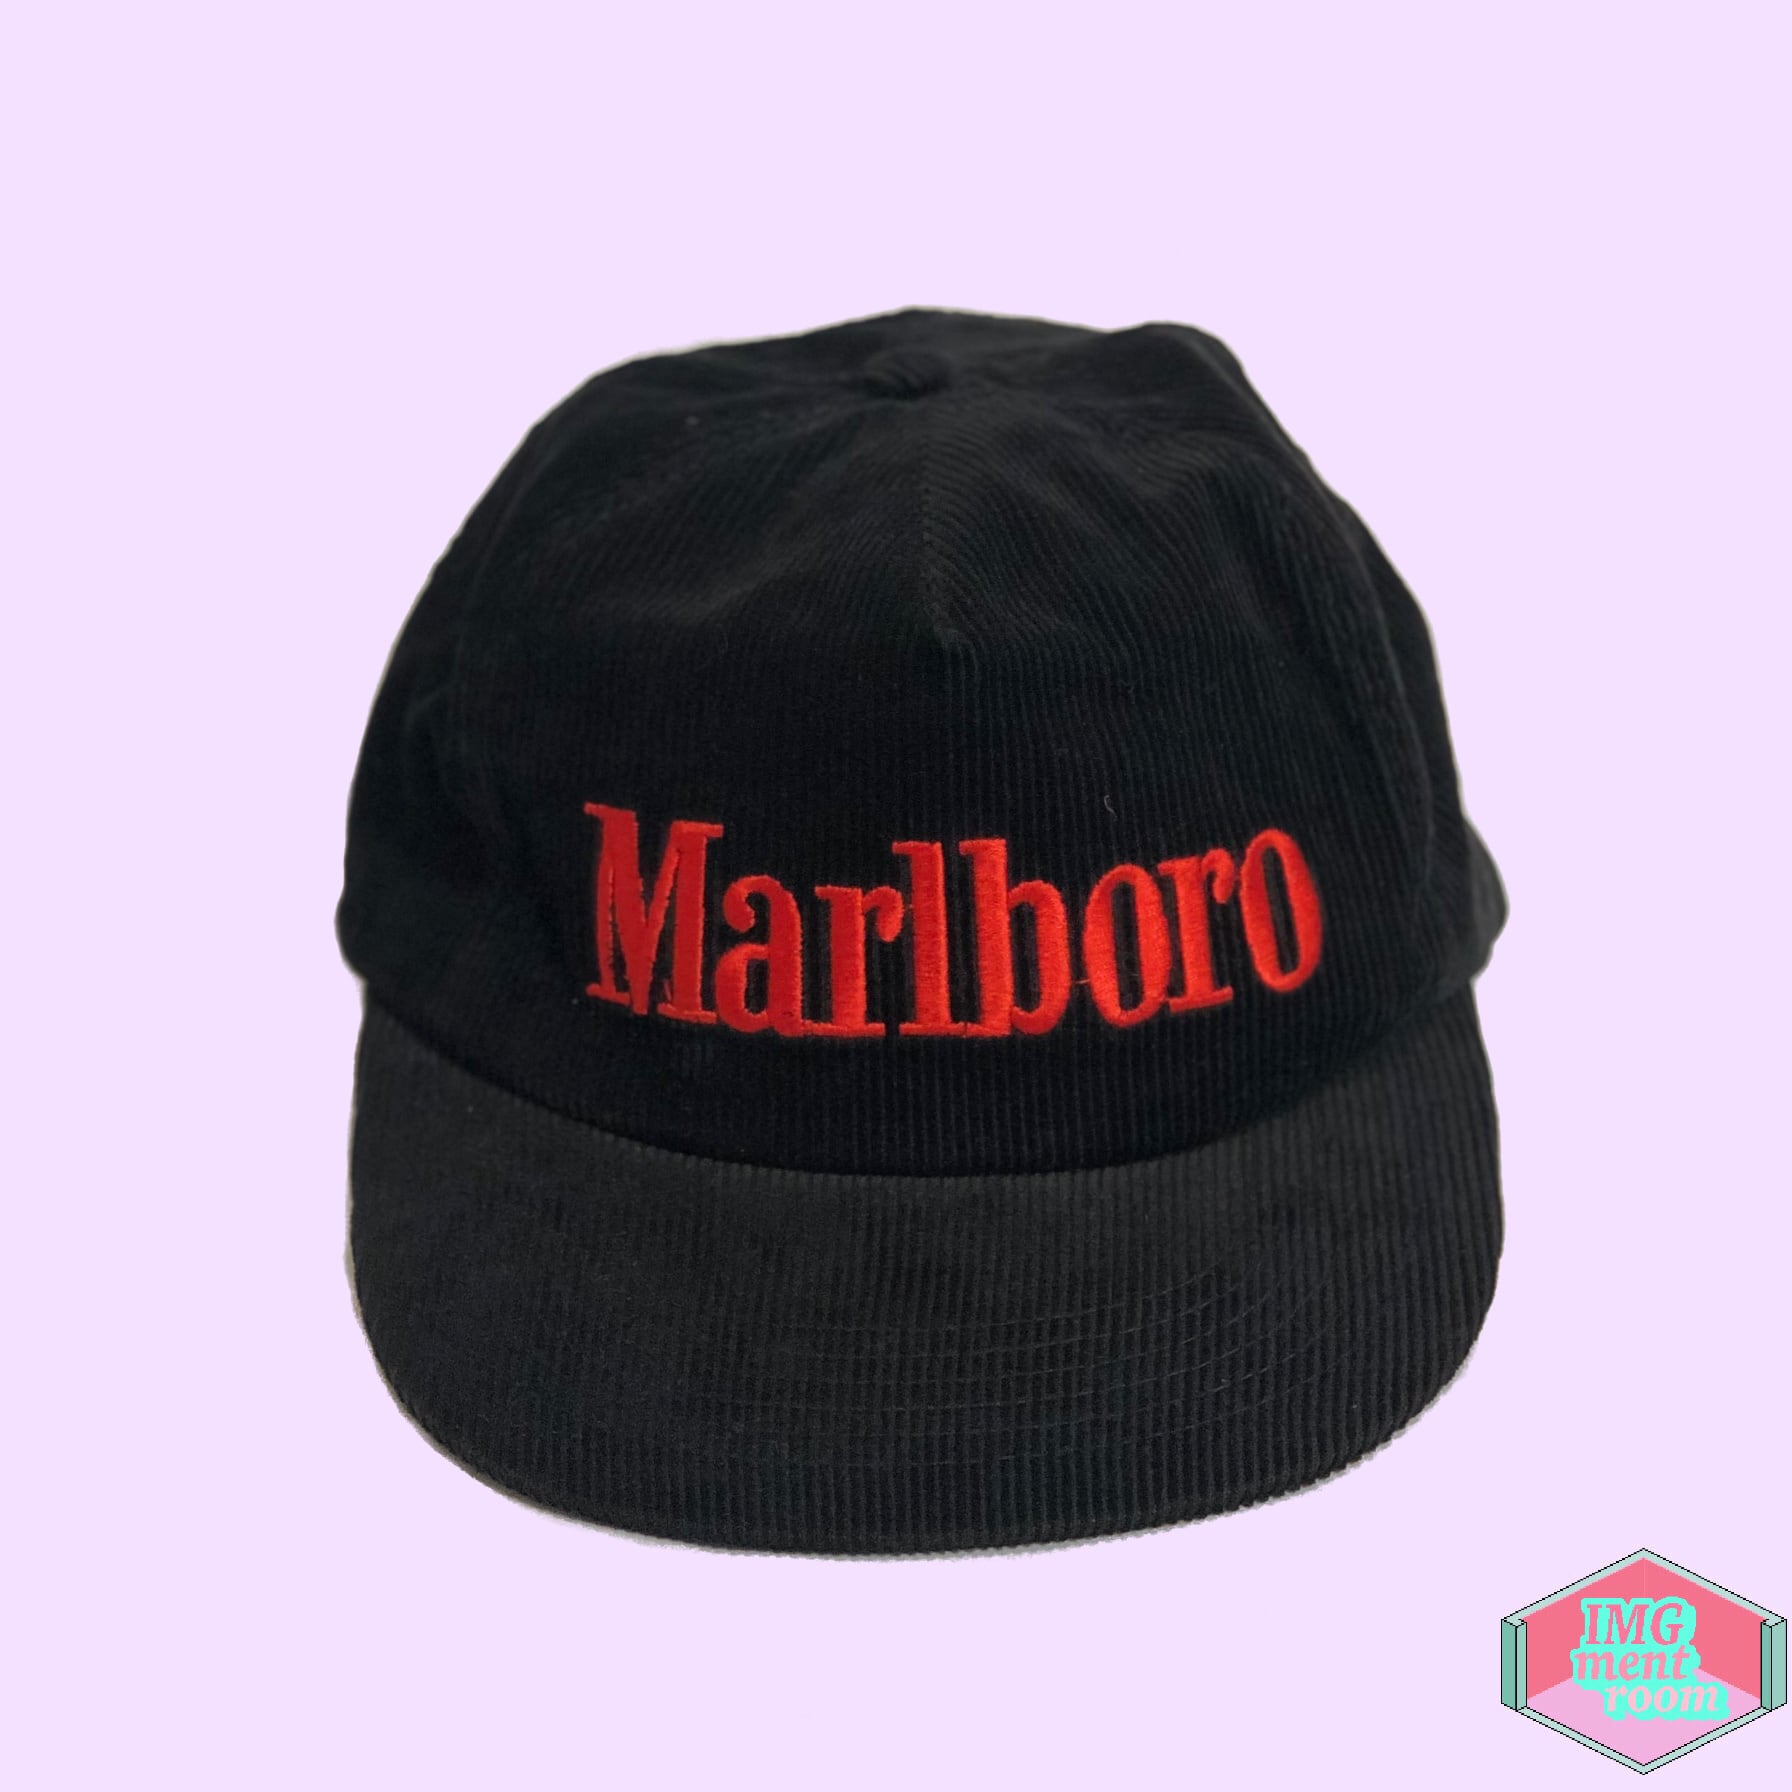 Vintage cap marlboro